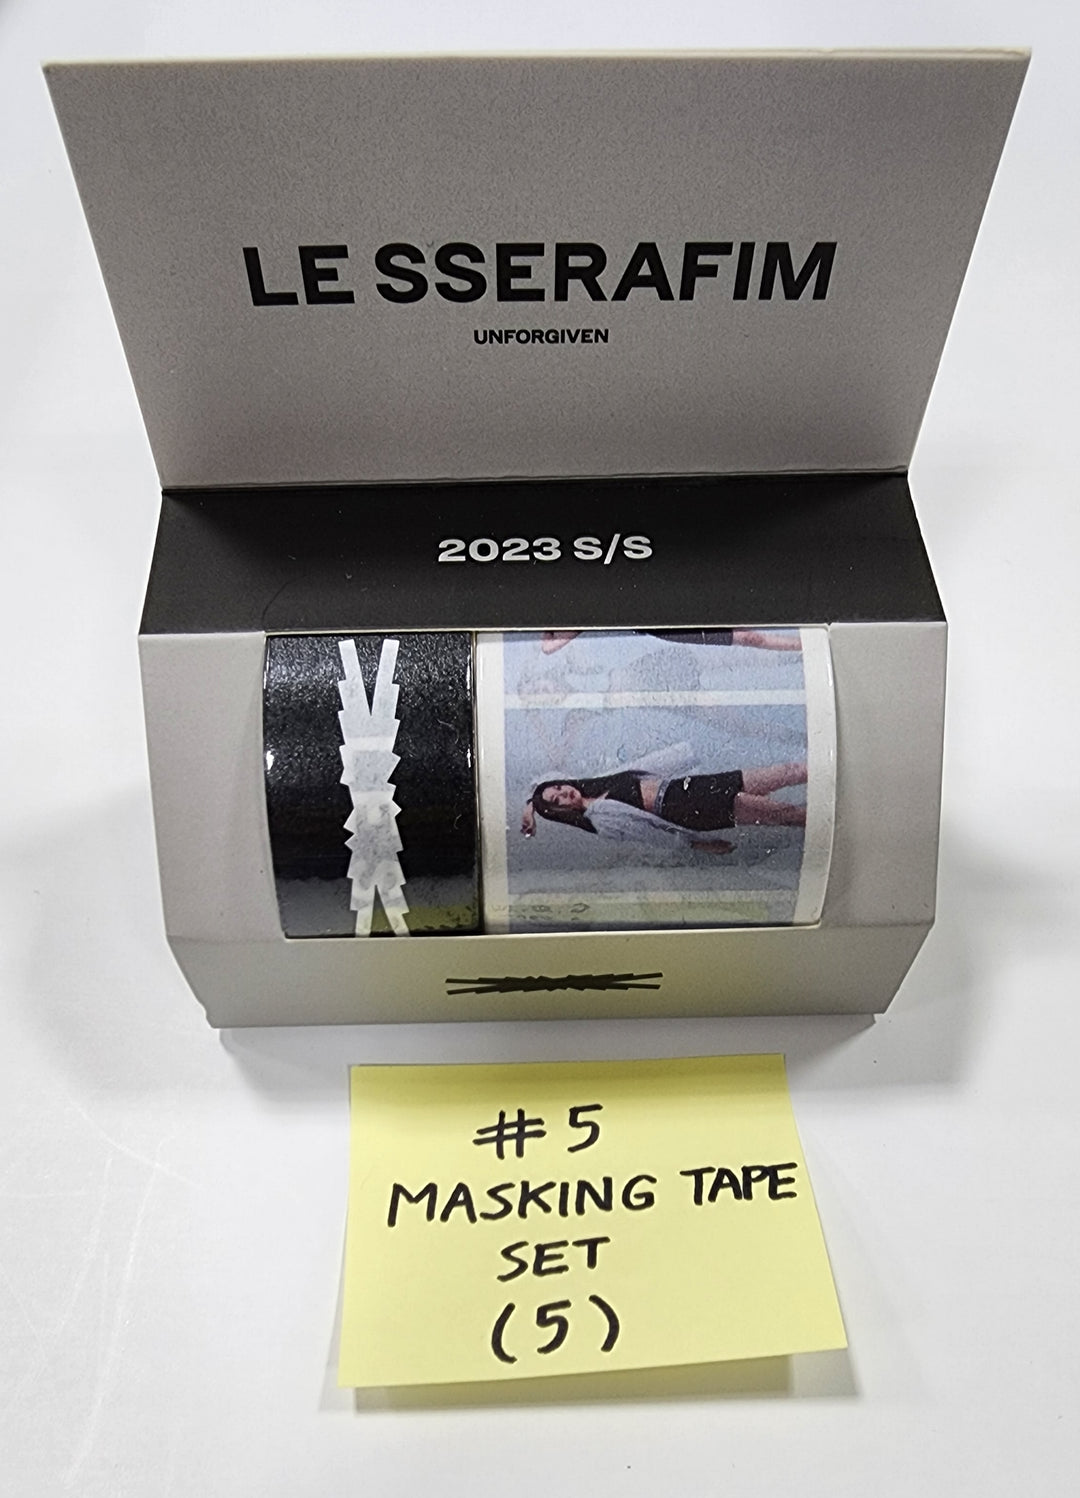 Le Sserafim - 2023 S/S Pop-up Store MD [バッジ、バッグ、フォトカード&amp;缶ケースセット、マスキングテープセット、4カットフォトセット、レンチキュラーフォトセット、ライトスティック] [8/7再入荷]